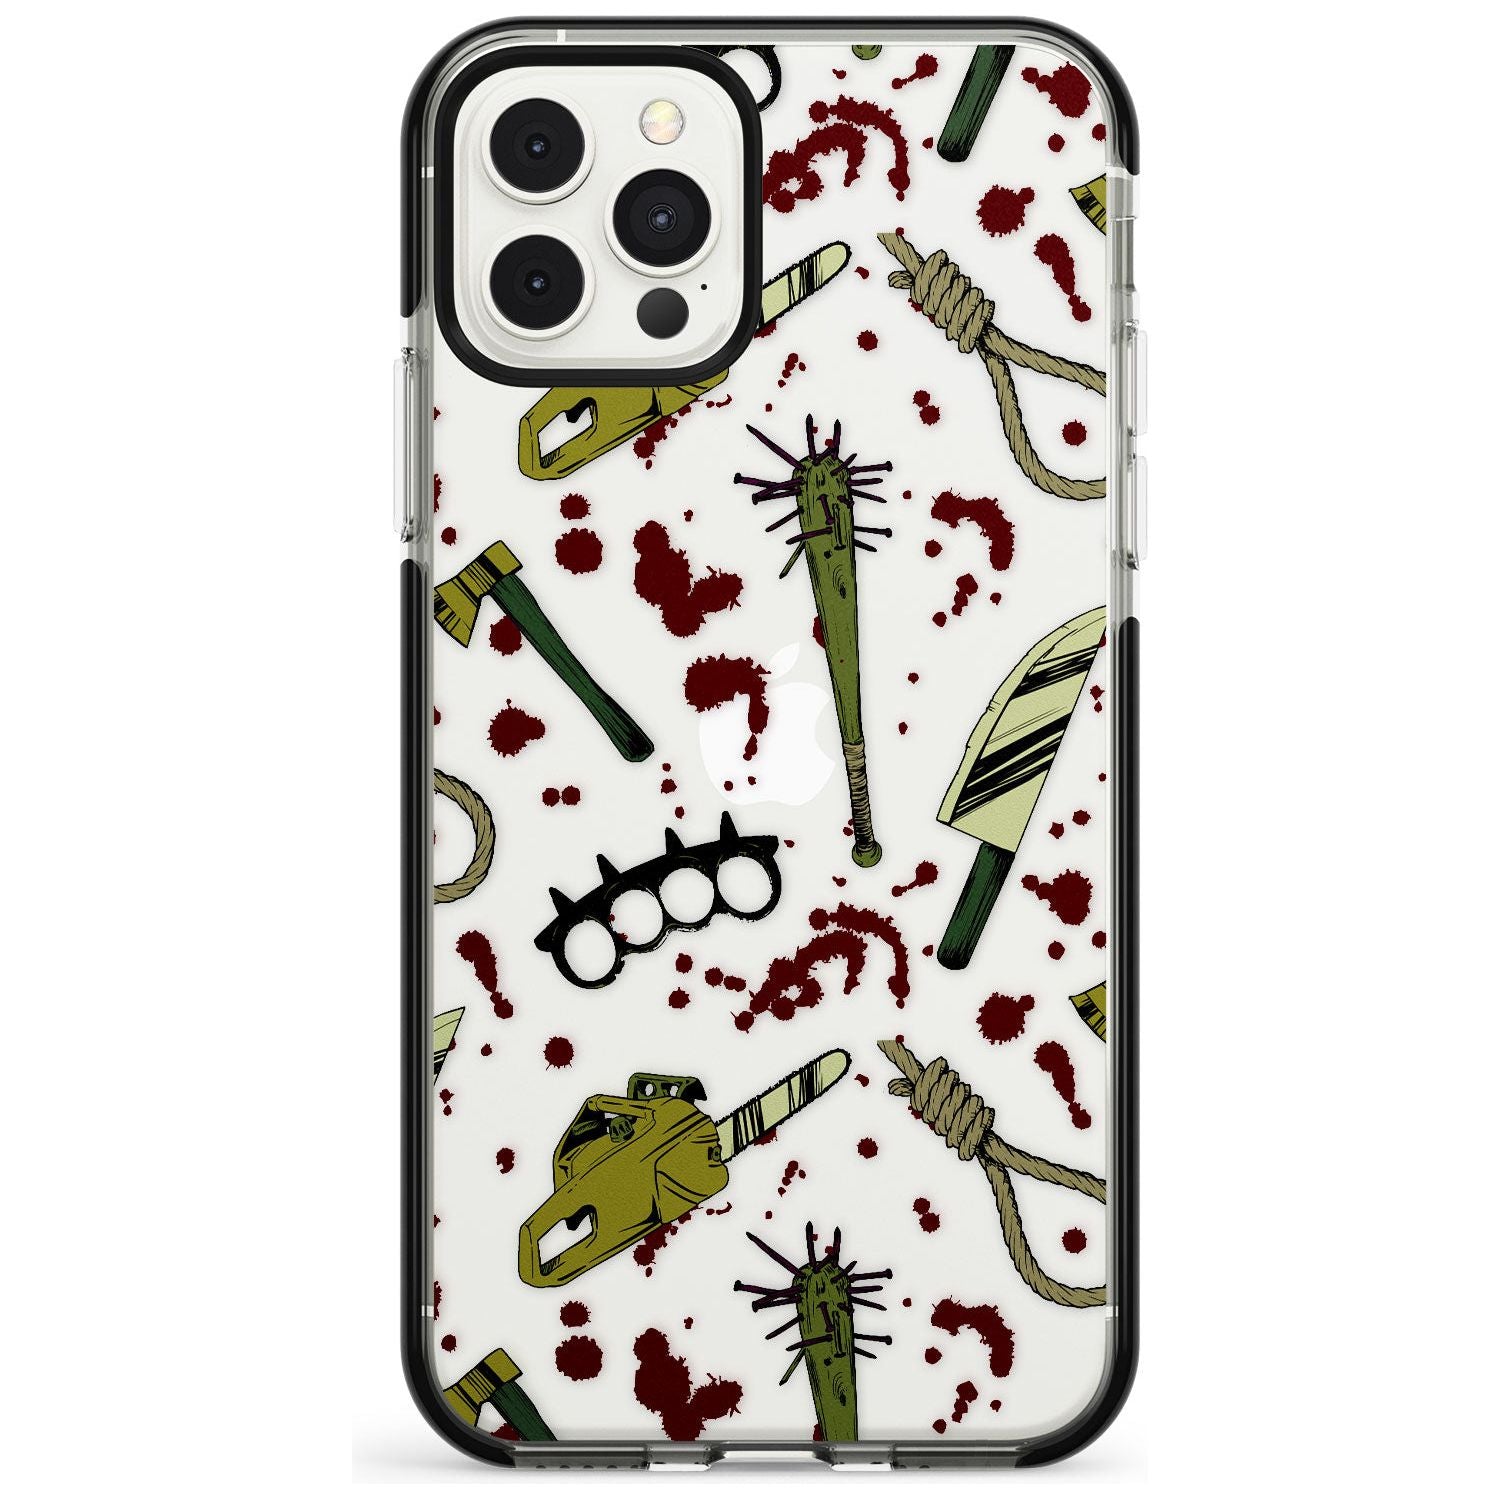 Movie Massacre Black Impact Phone Case for iPhone 11